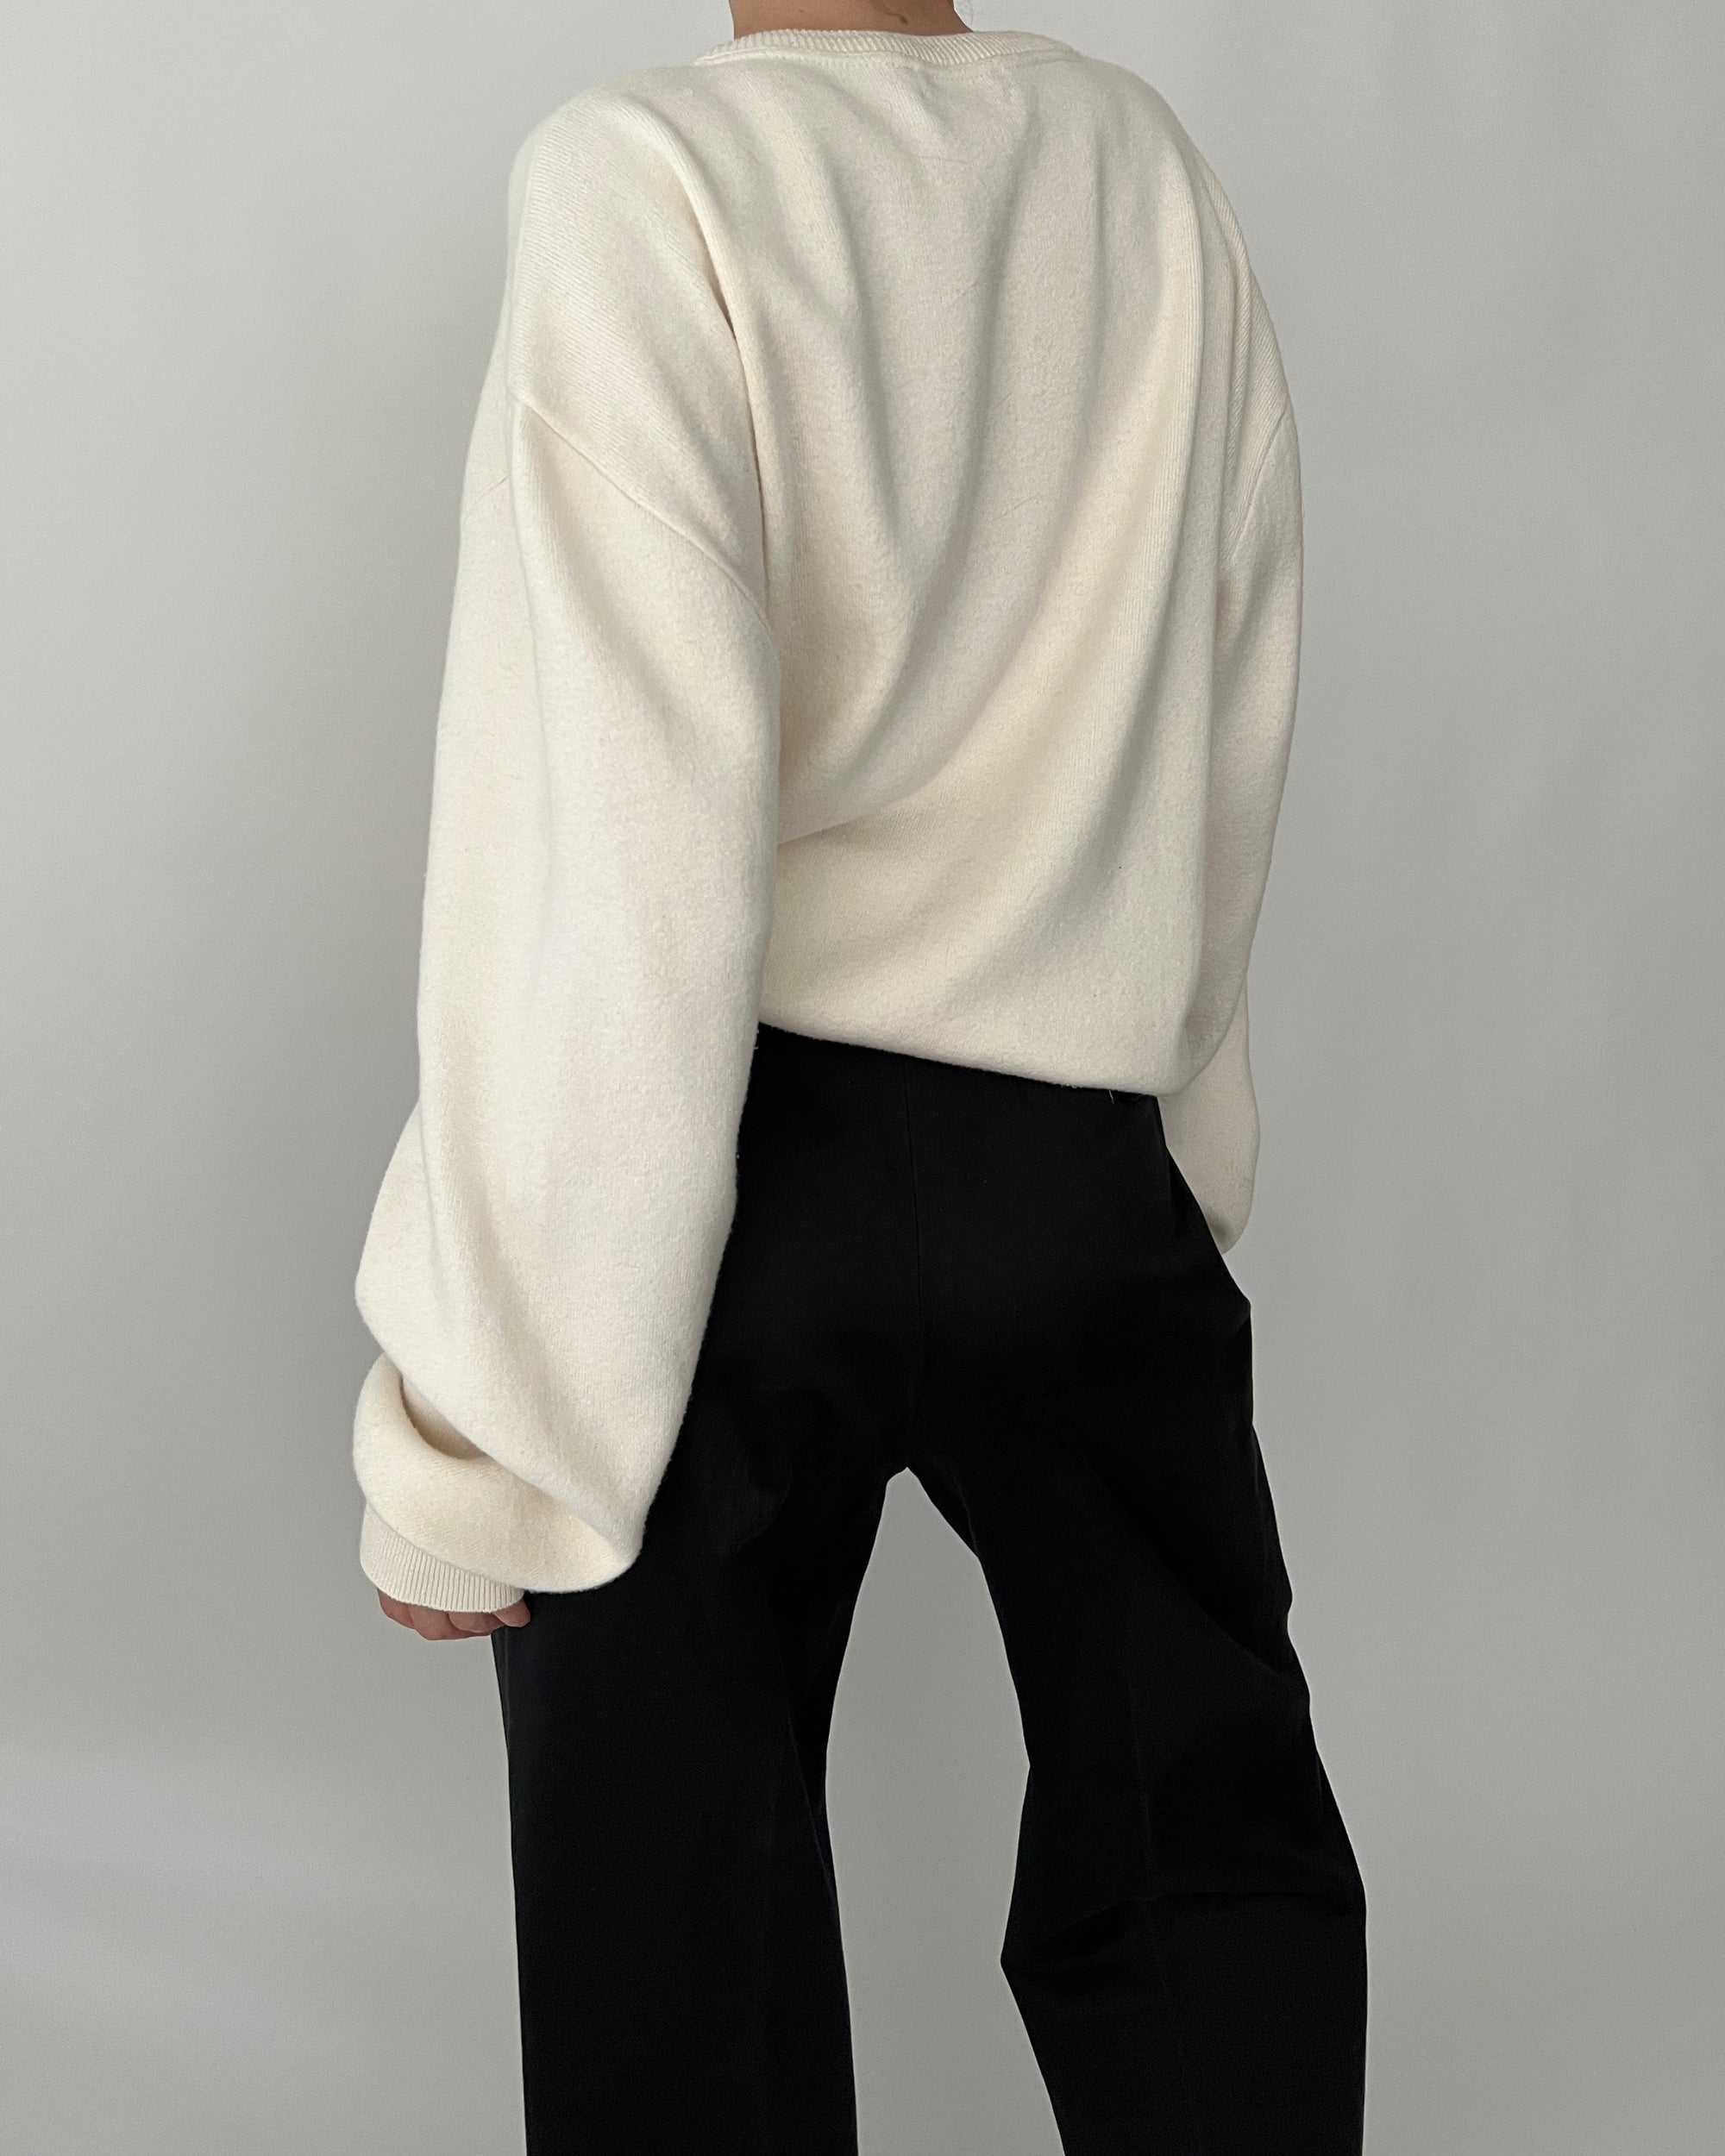 Vintage Christian Dior Ivory Crest Sweater